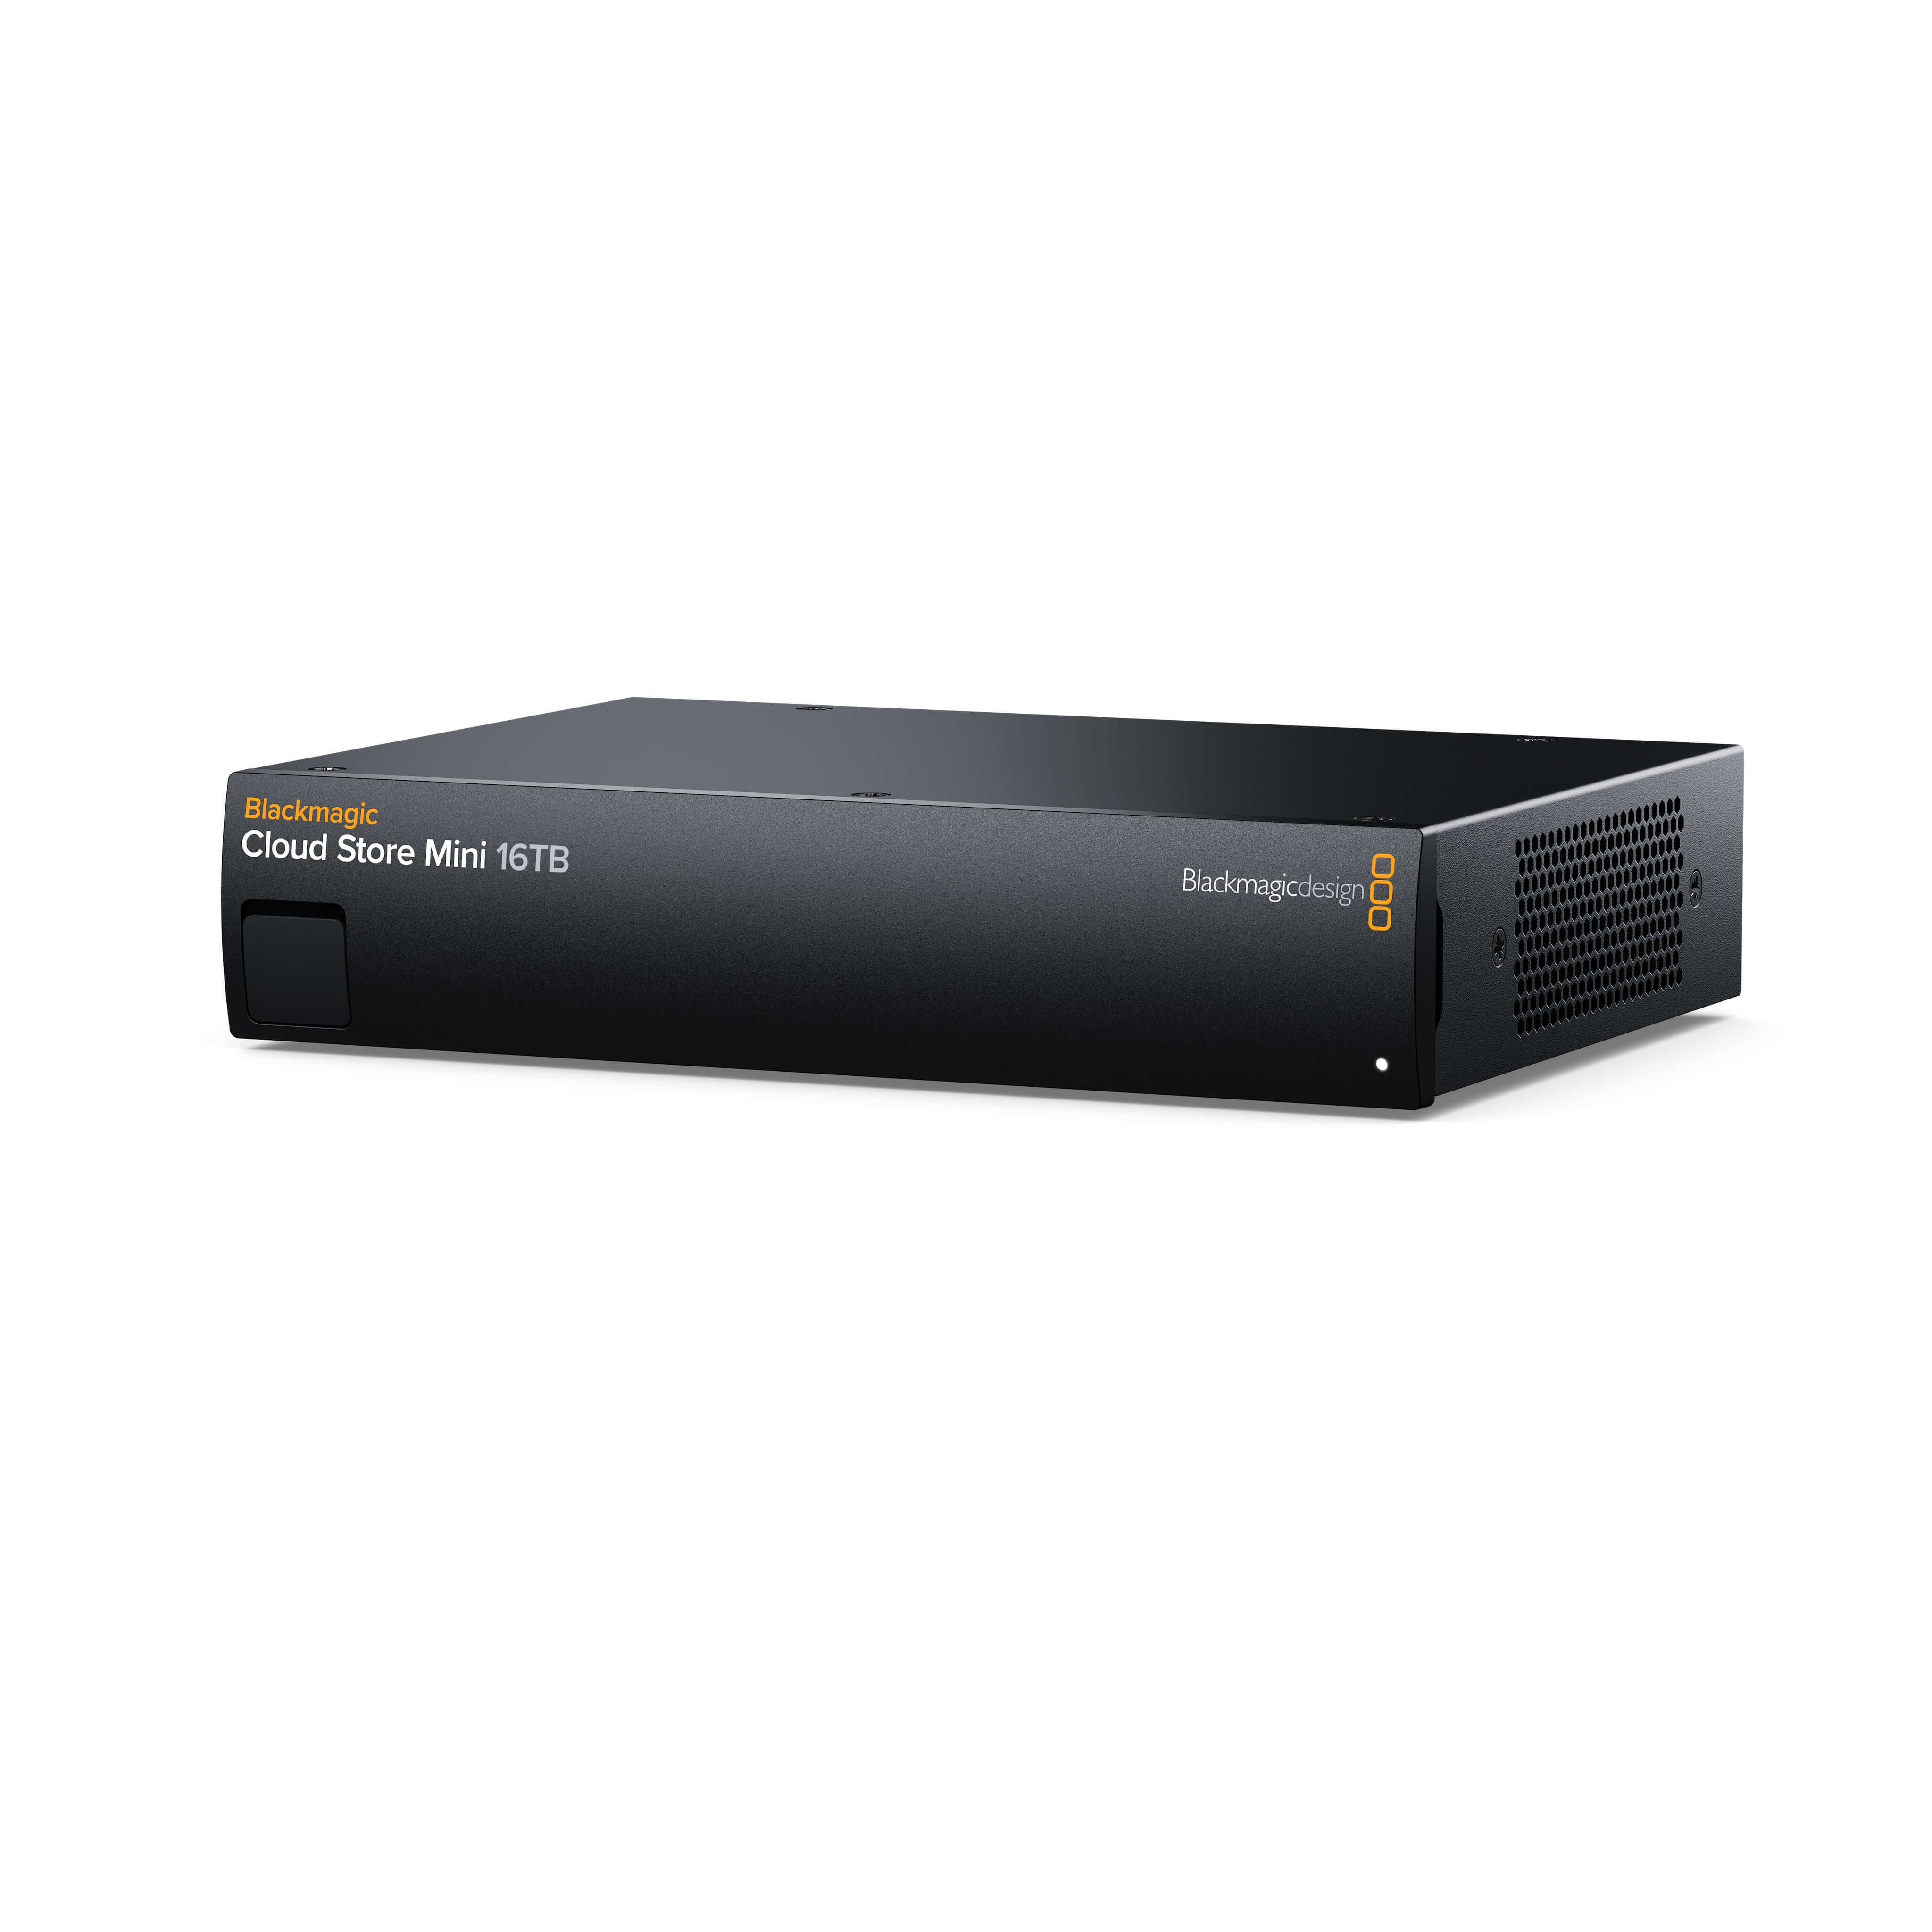 Blackmagic Design Cloud Store Mini 16TB - High Speed Network Storage, angle